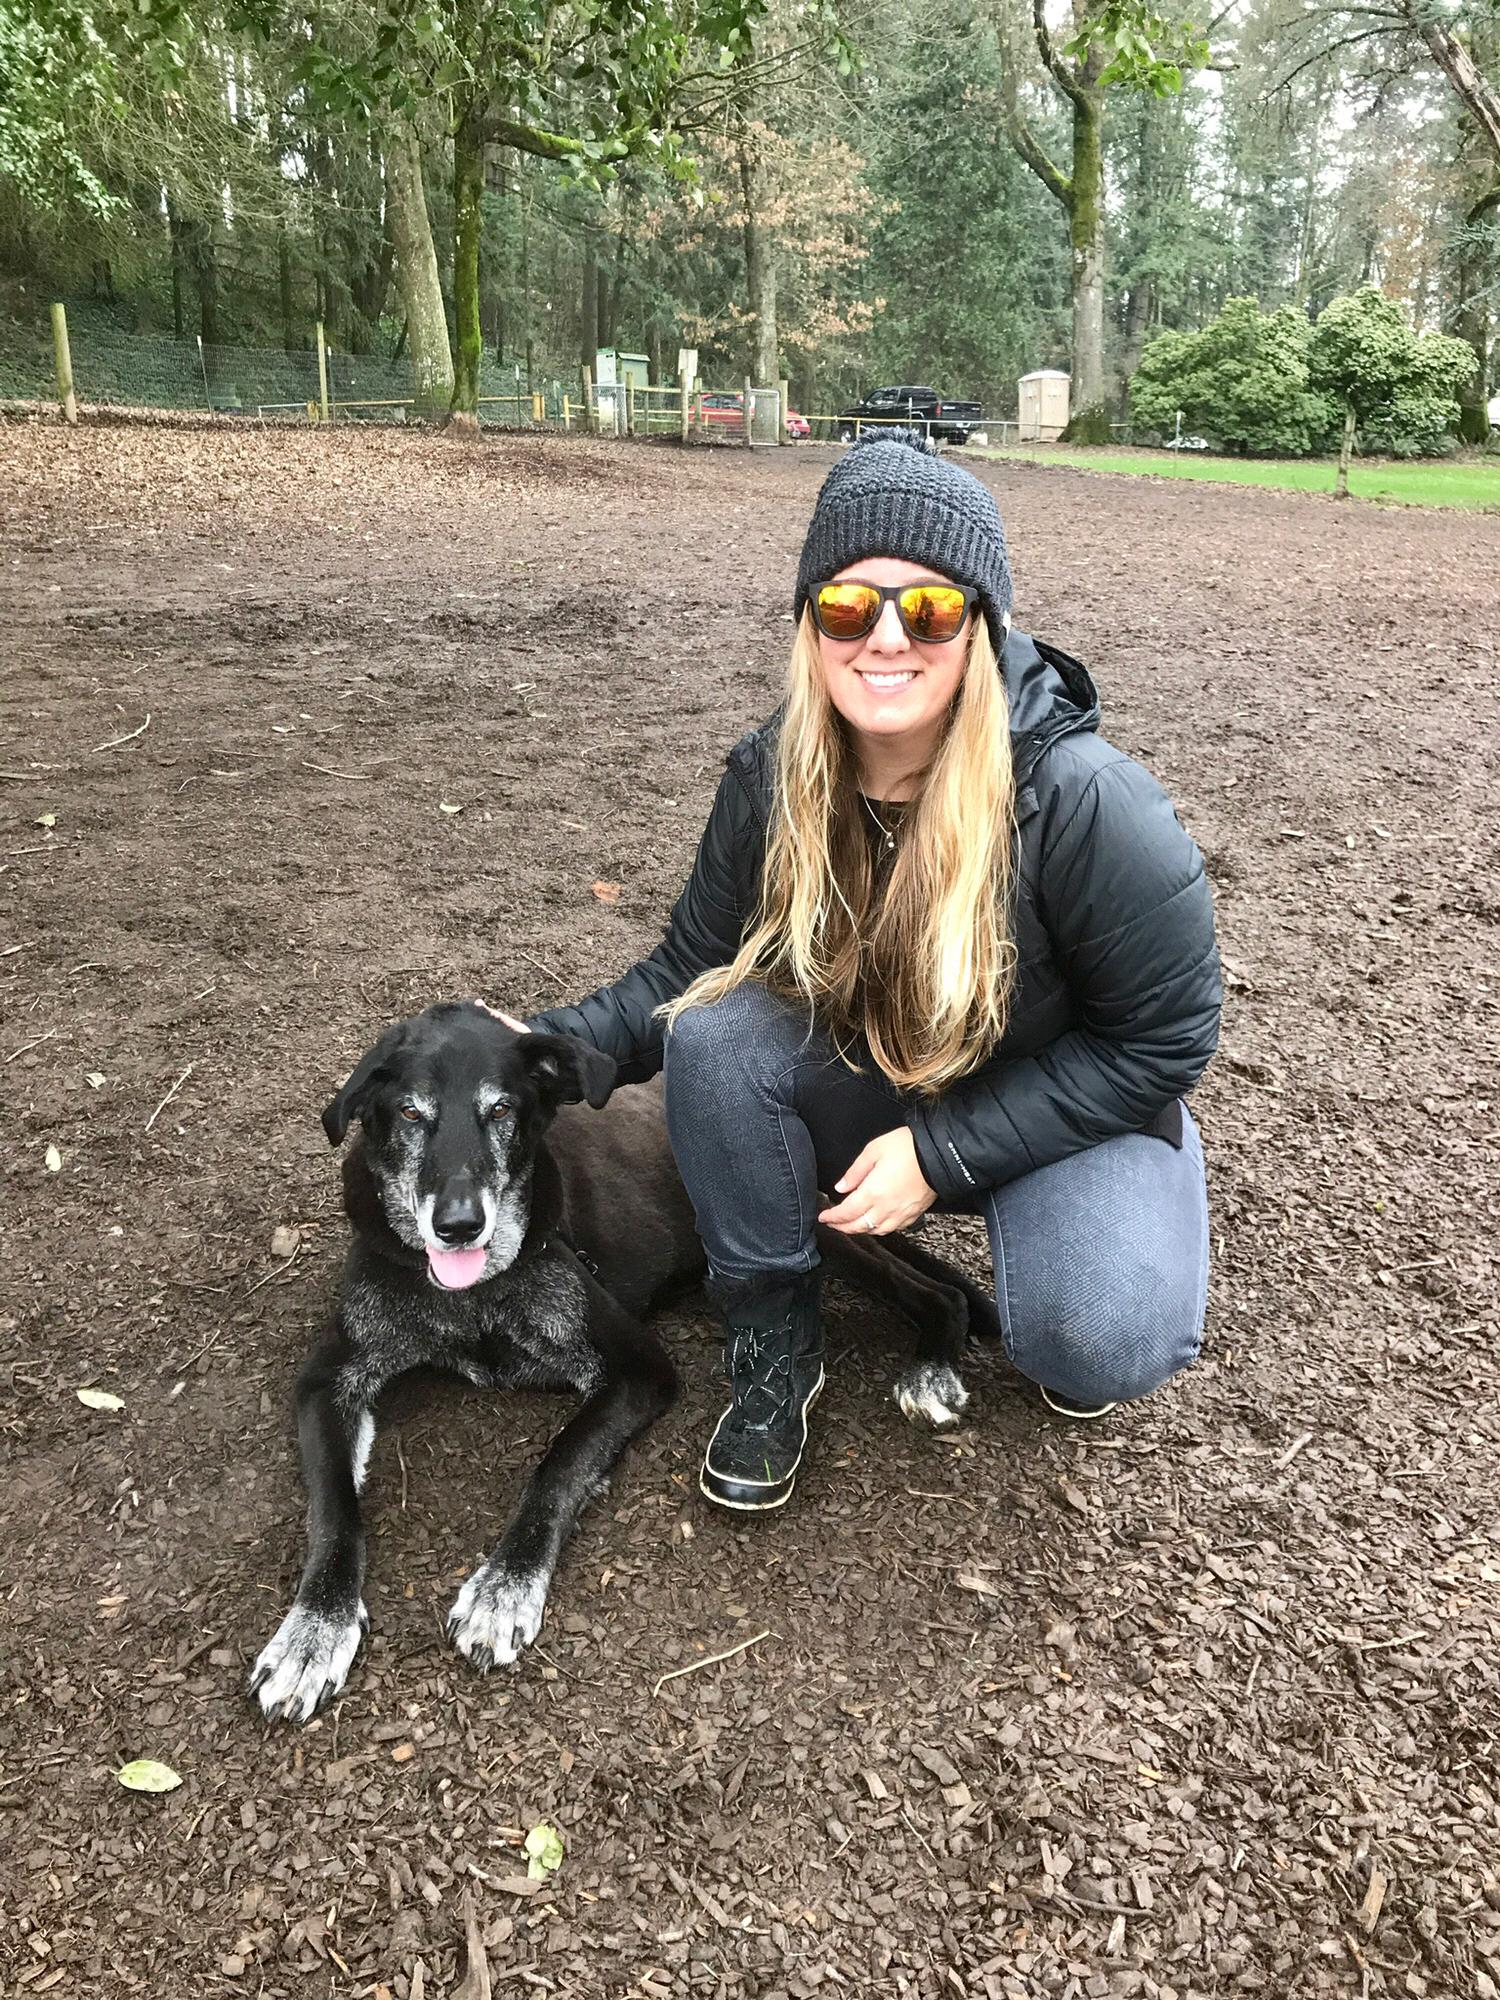 Quality time at Chimney Dog Park with Yogi - Portland, Oregon January 2018